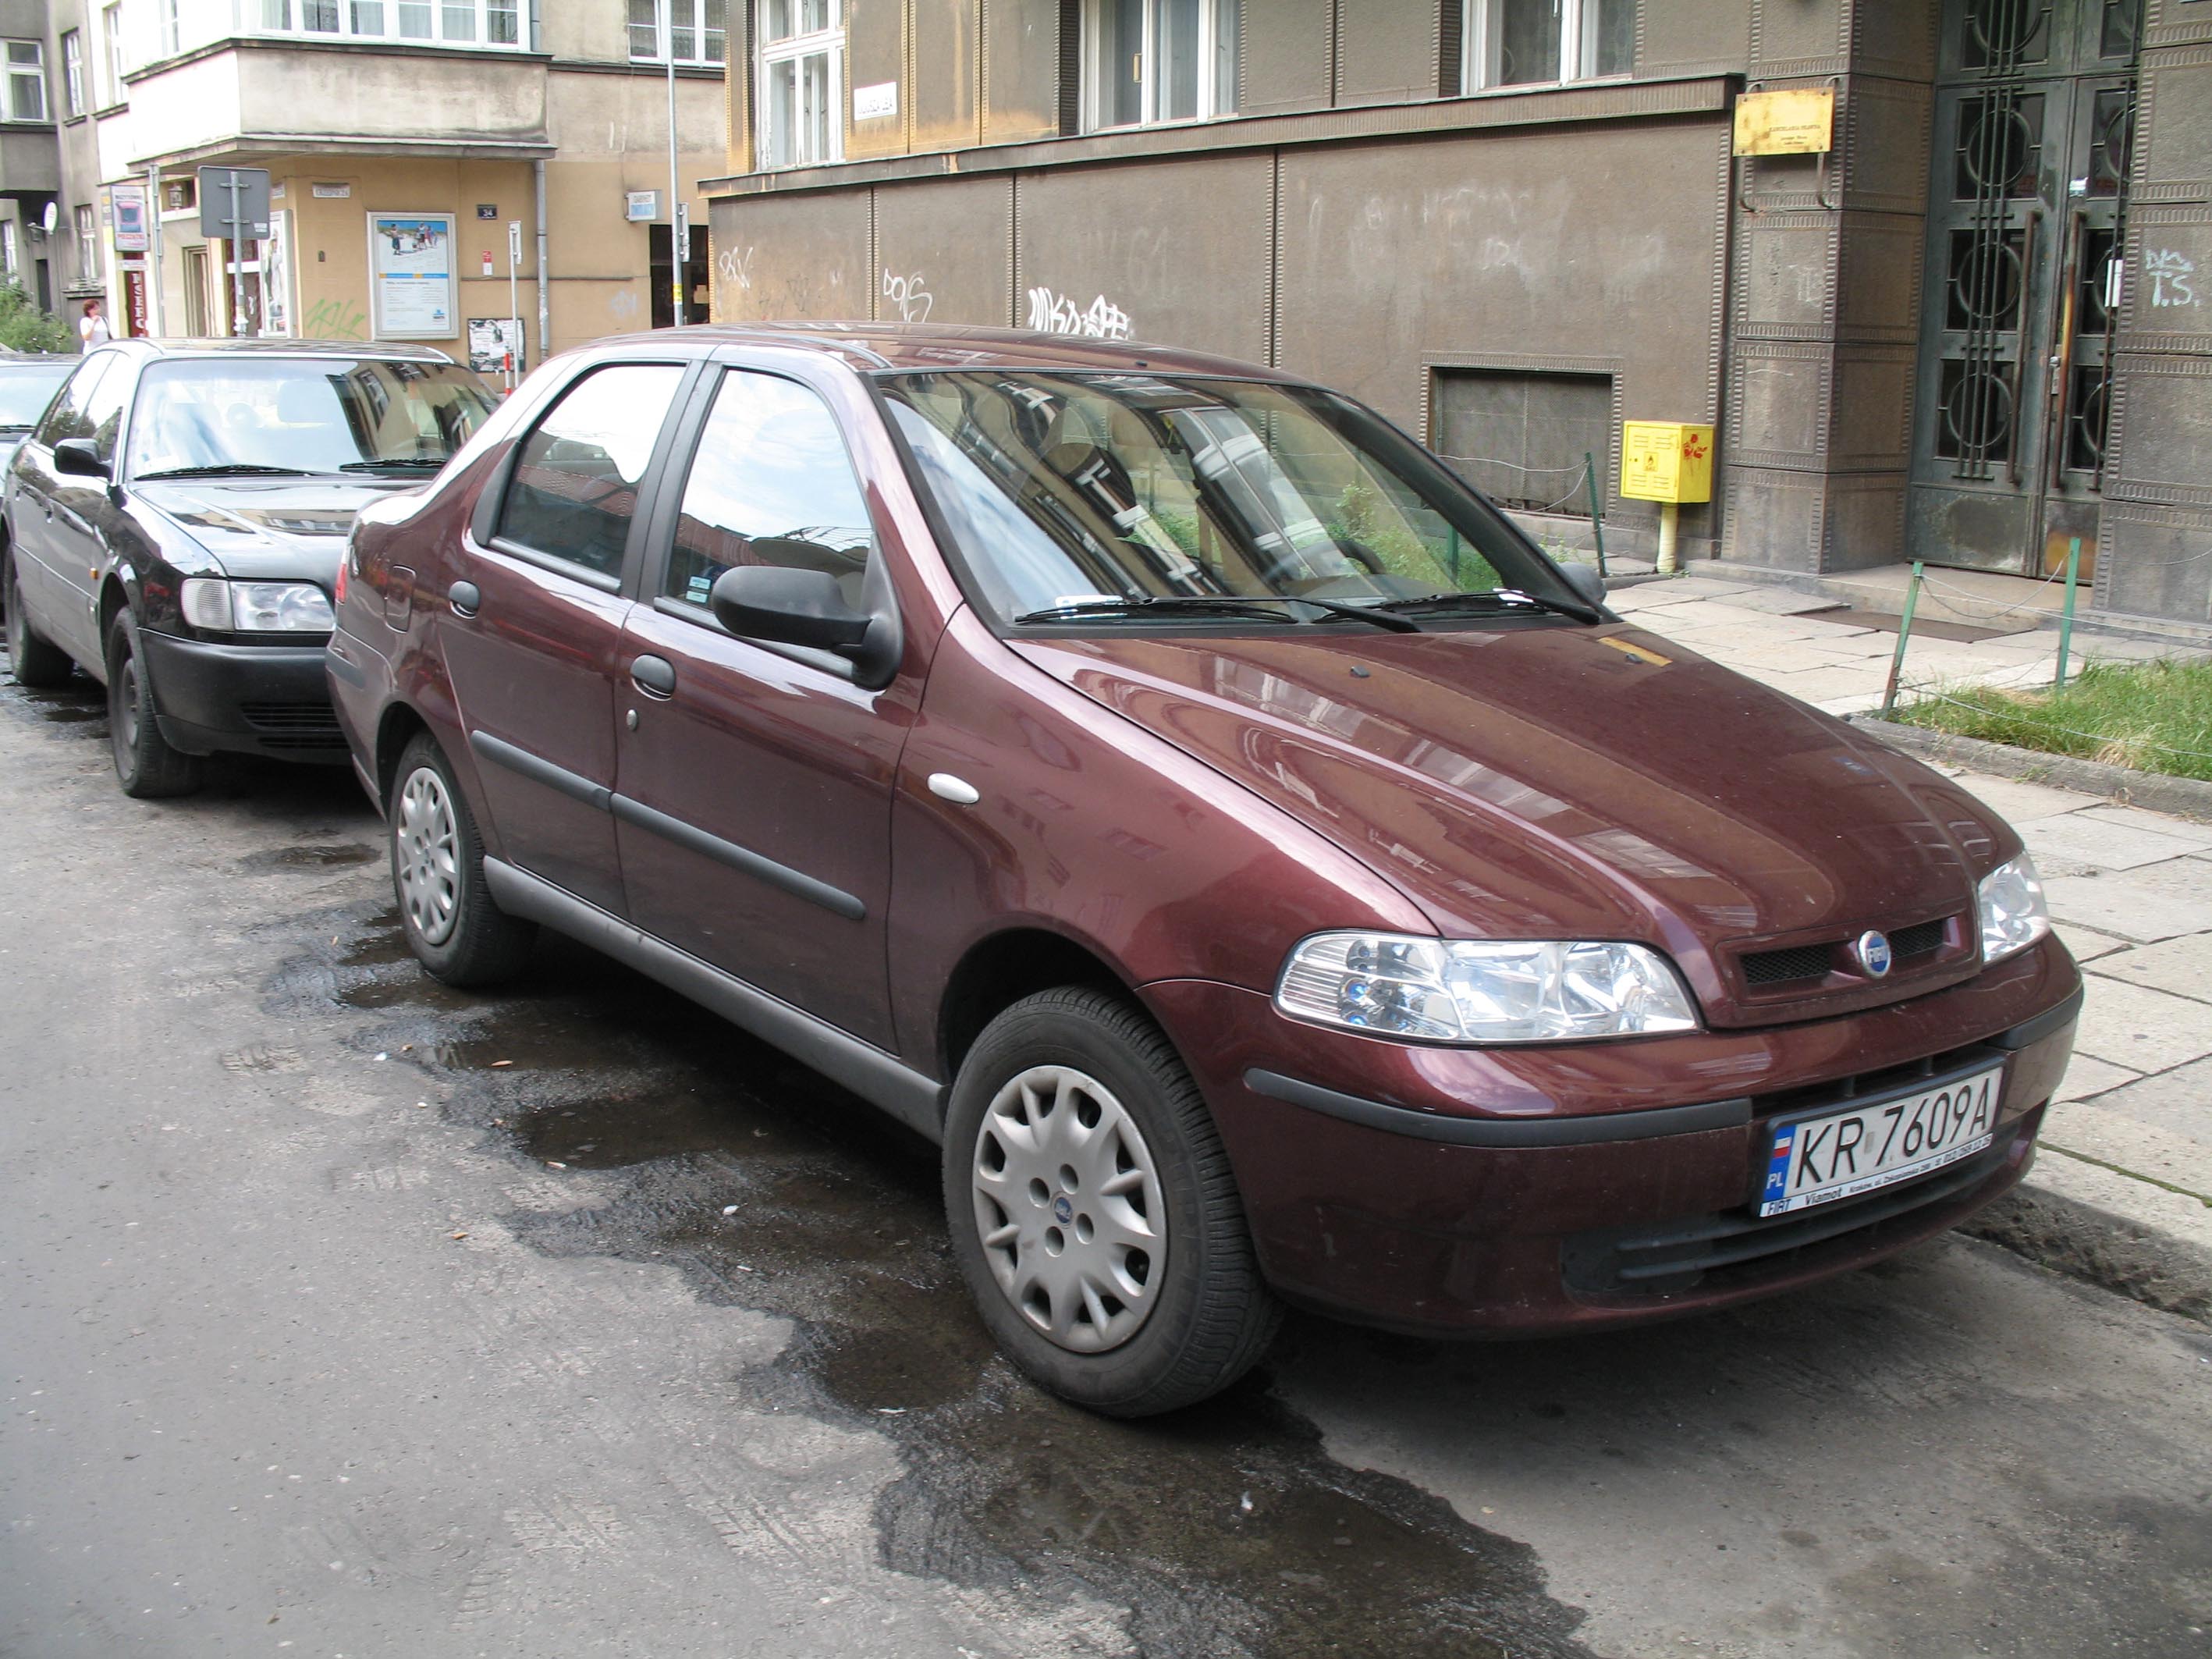 Dossier: Fiat Albea à Cracovie.jpg - Wikimedia Commons